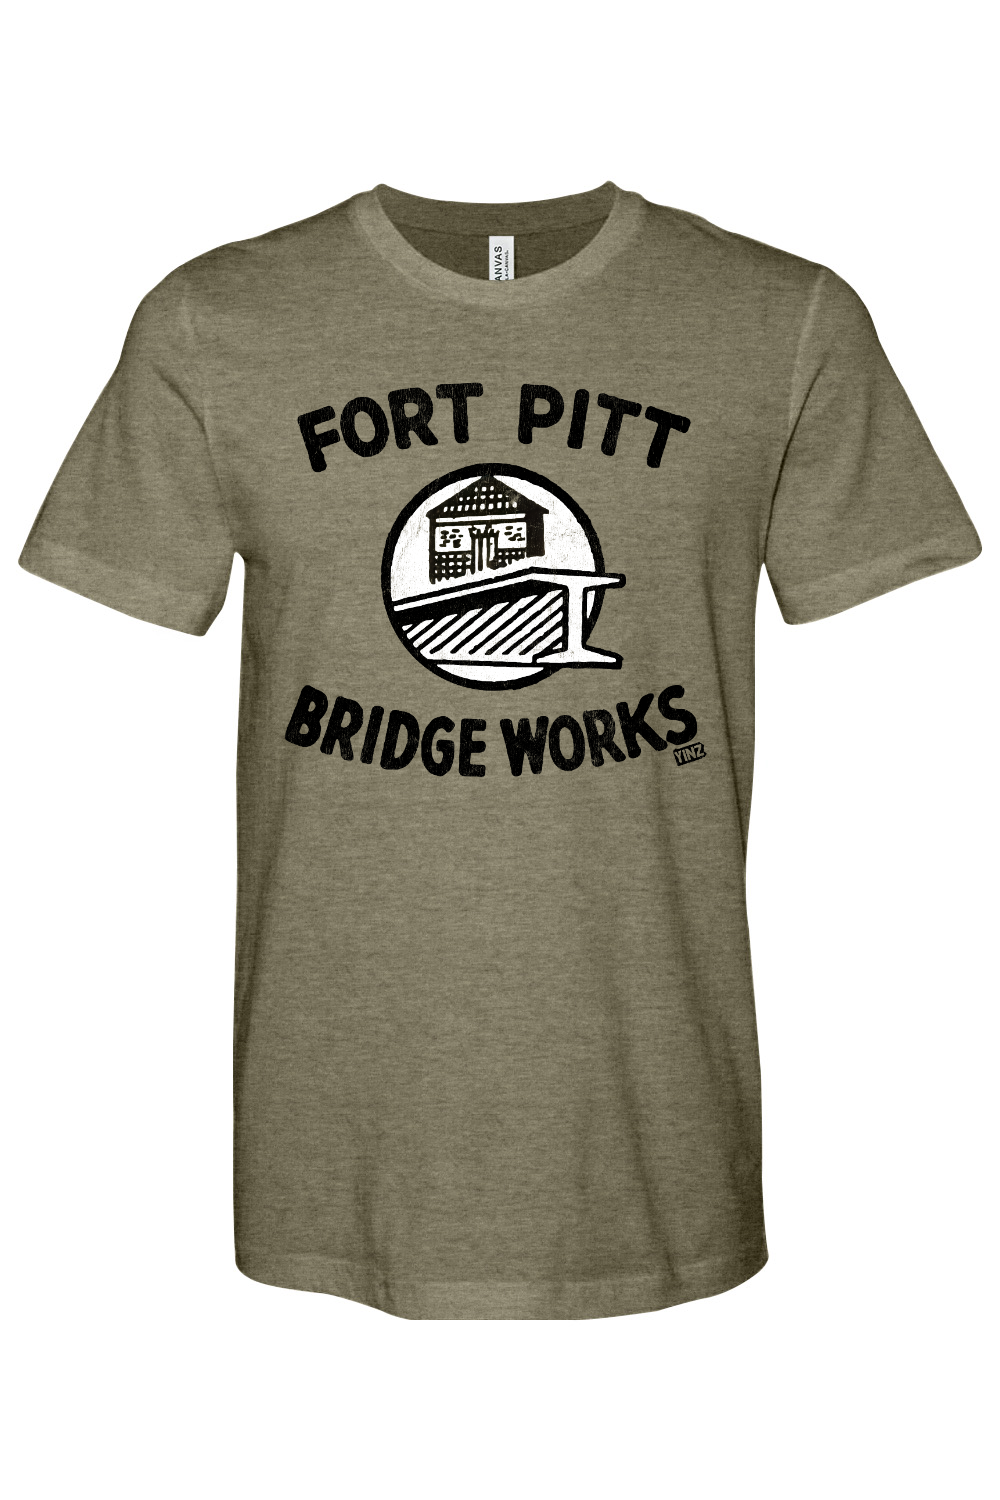 Fort Pitt Bridge Works  - Bella + Canvas Heathered Jersey Tee - Yinzylvania